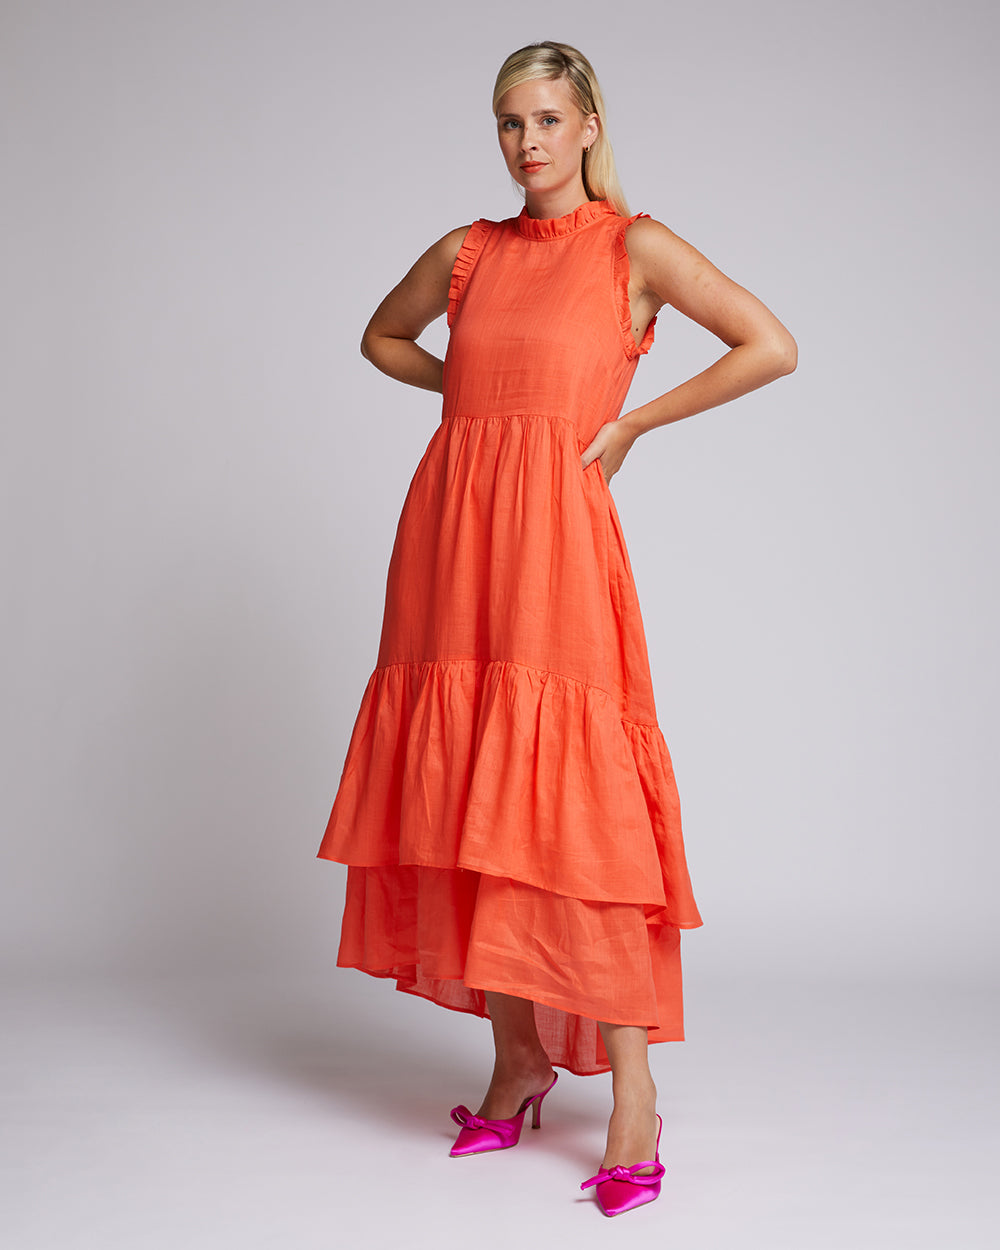 Annalise Dress - Tangerine